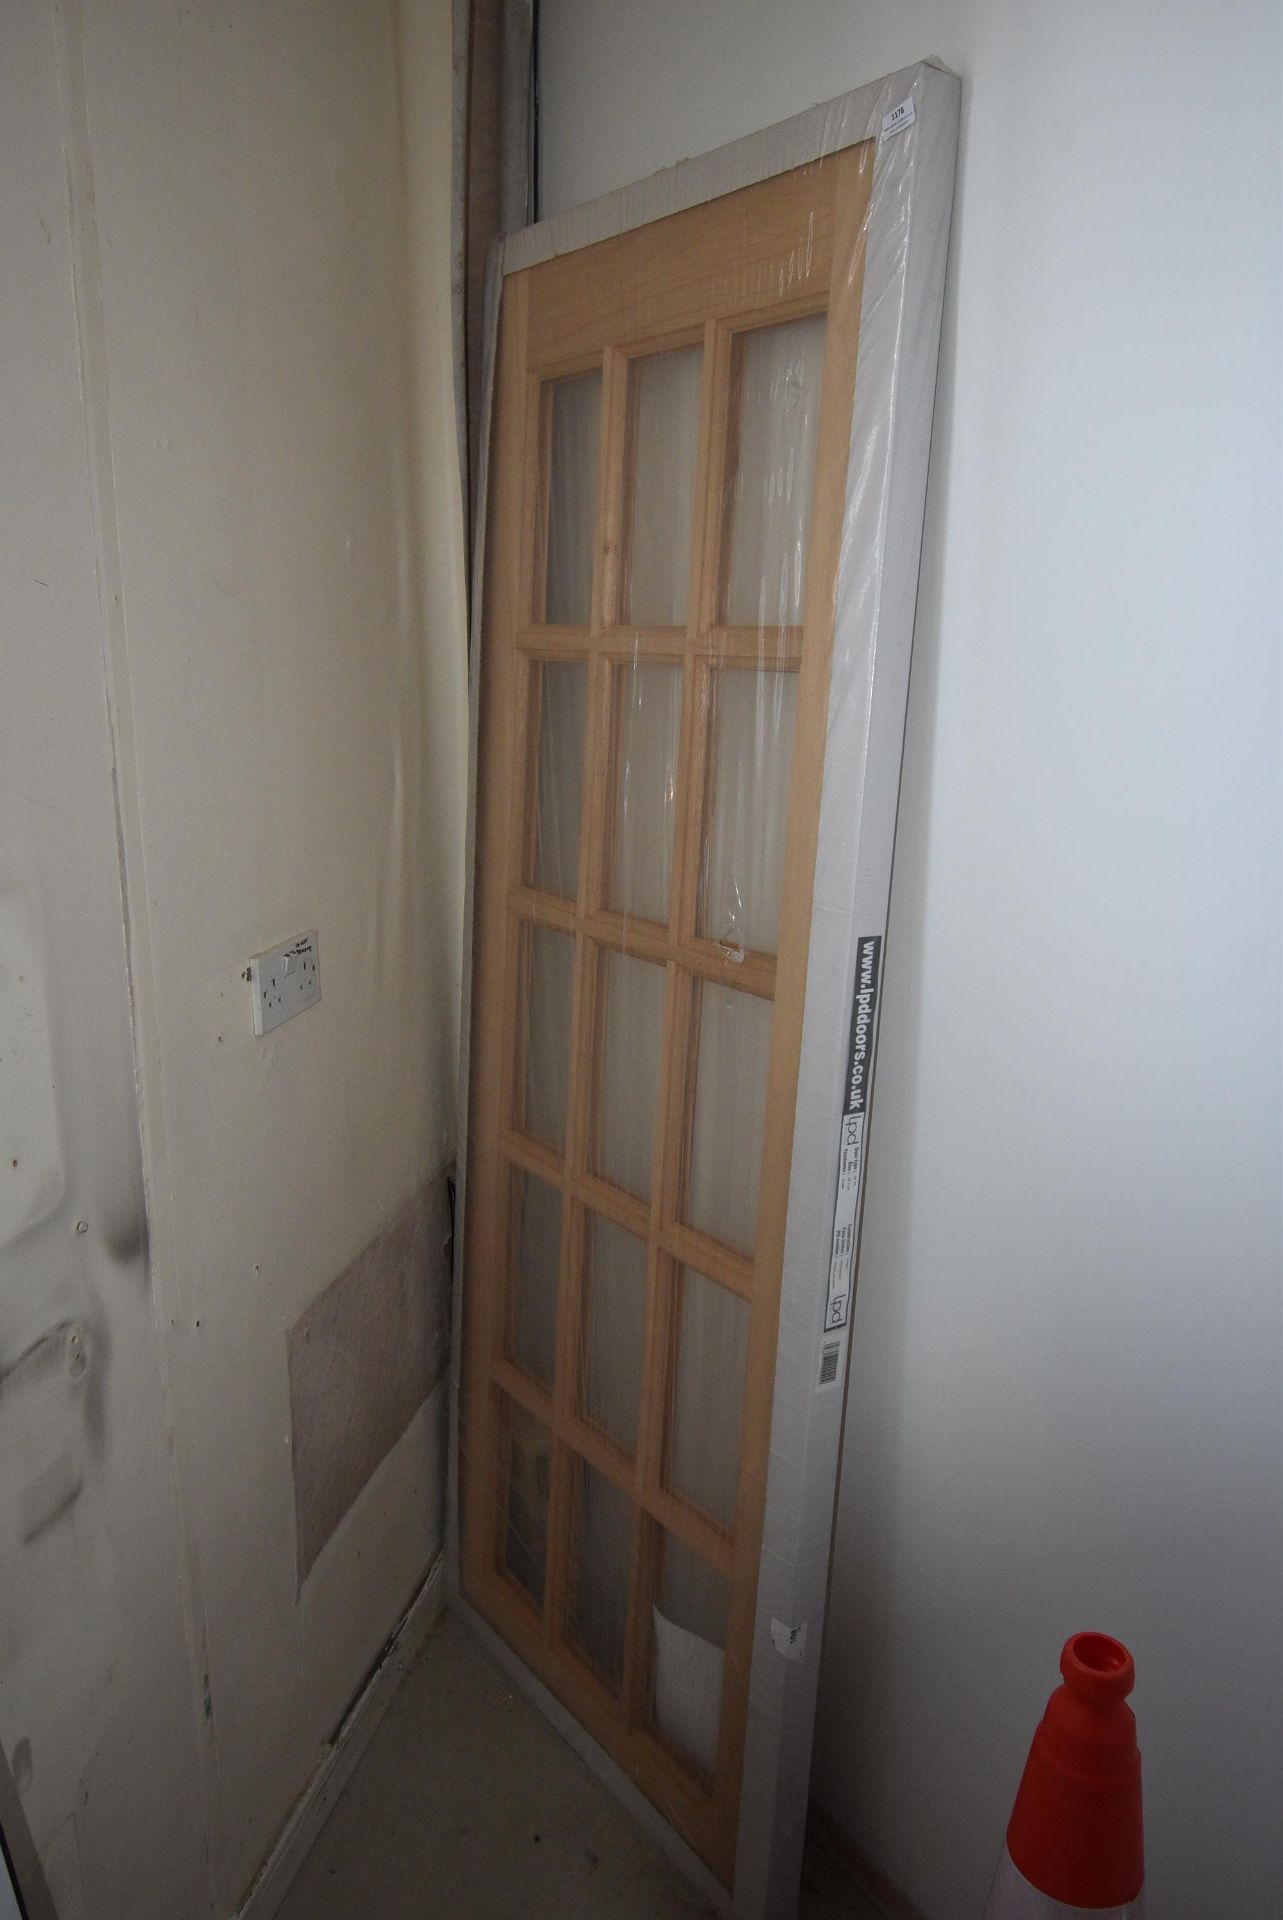 *LPD Door SA 15L 78” x 30” Fifteen Pane Doors 44mm thick (Location: 64 King Edward St, Grimsby, DN31